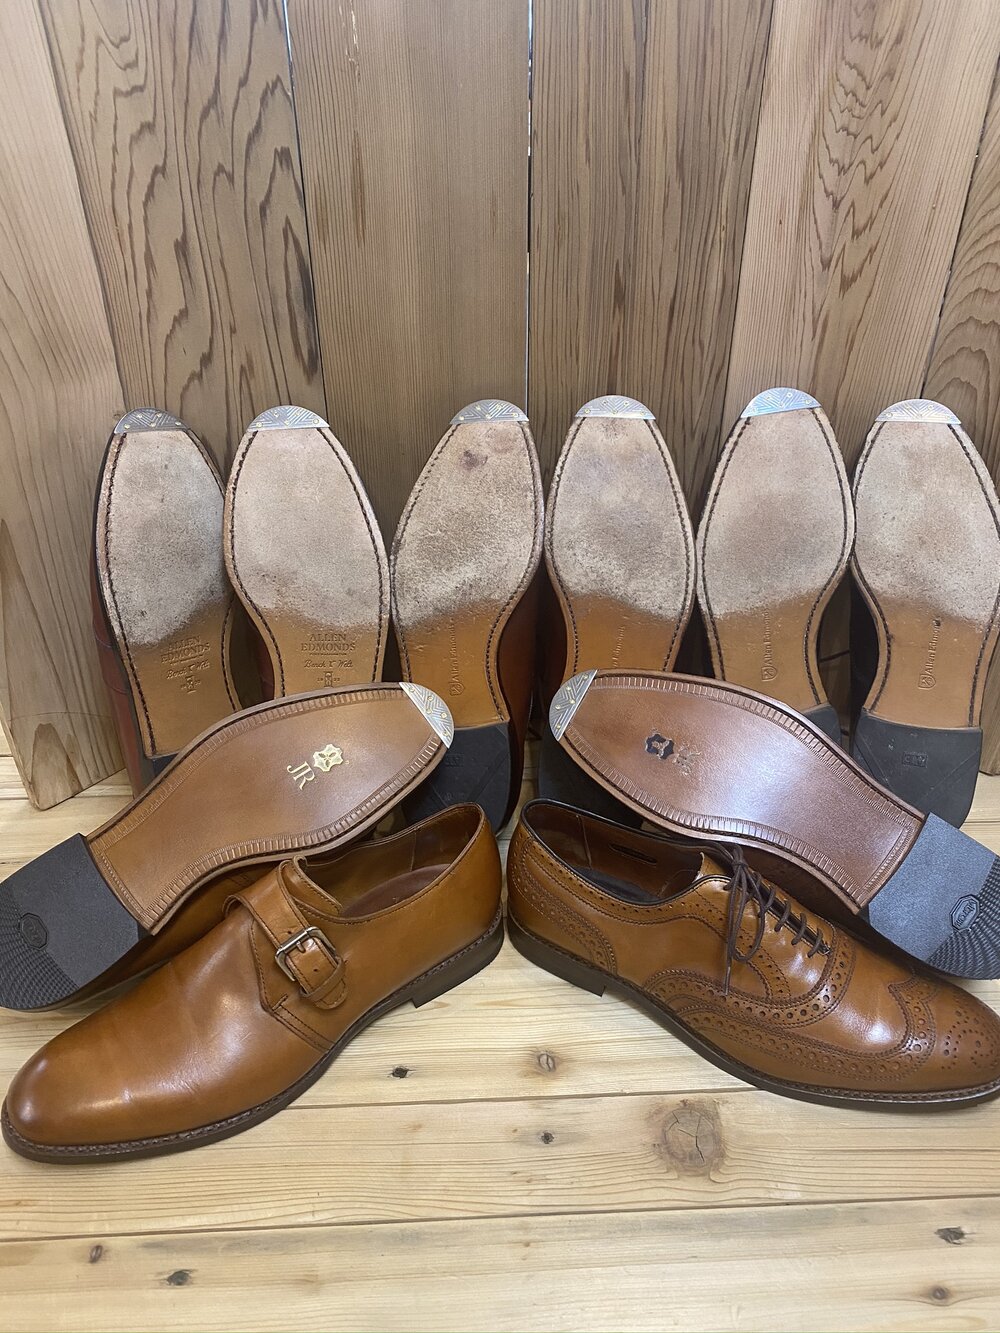 George S Shoes Repairs, Leather Repair Lexington Ky